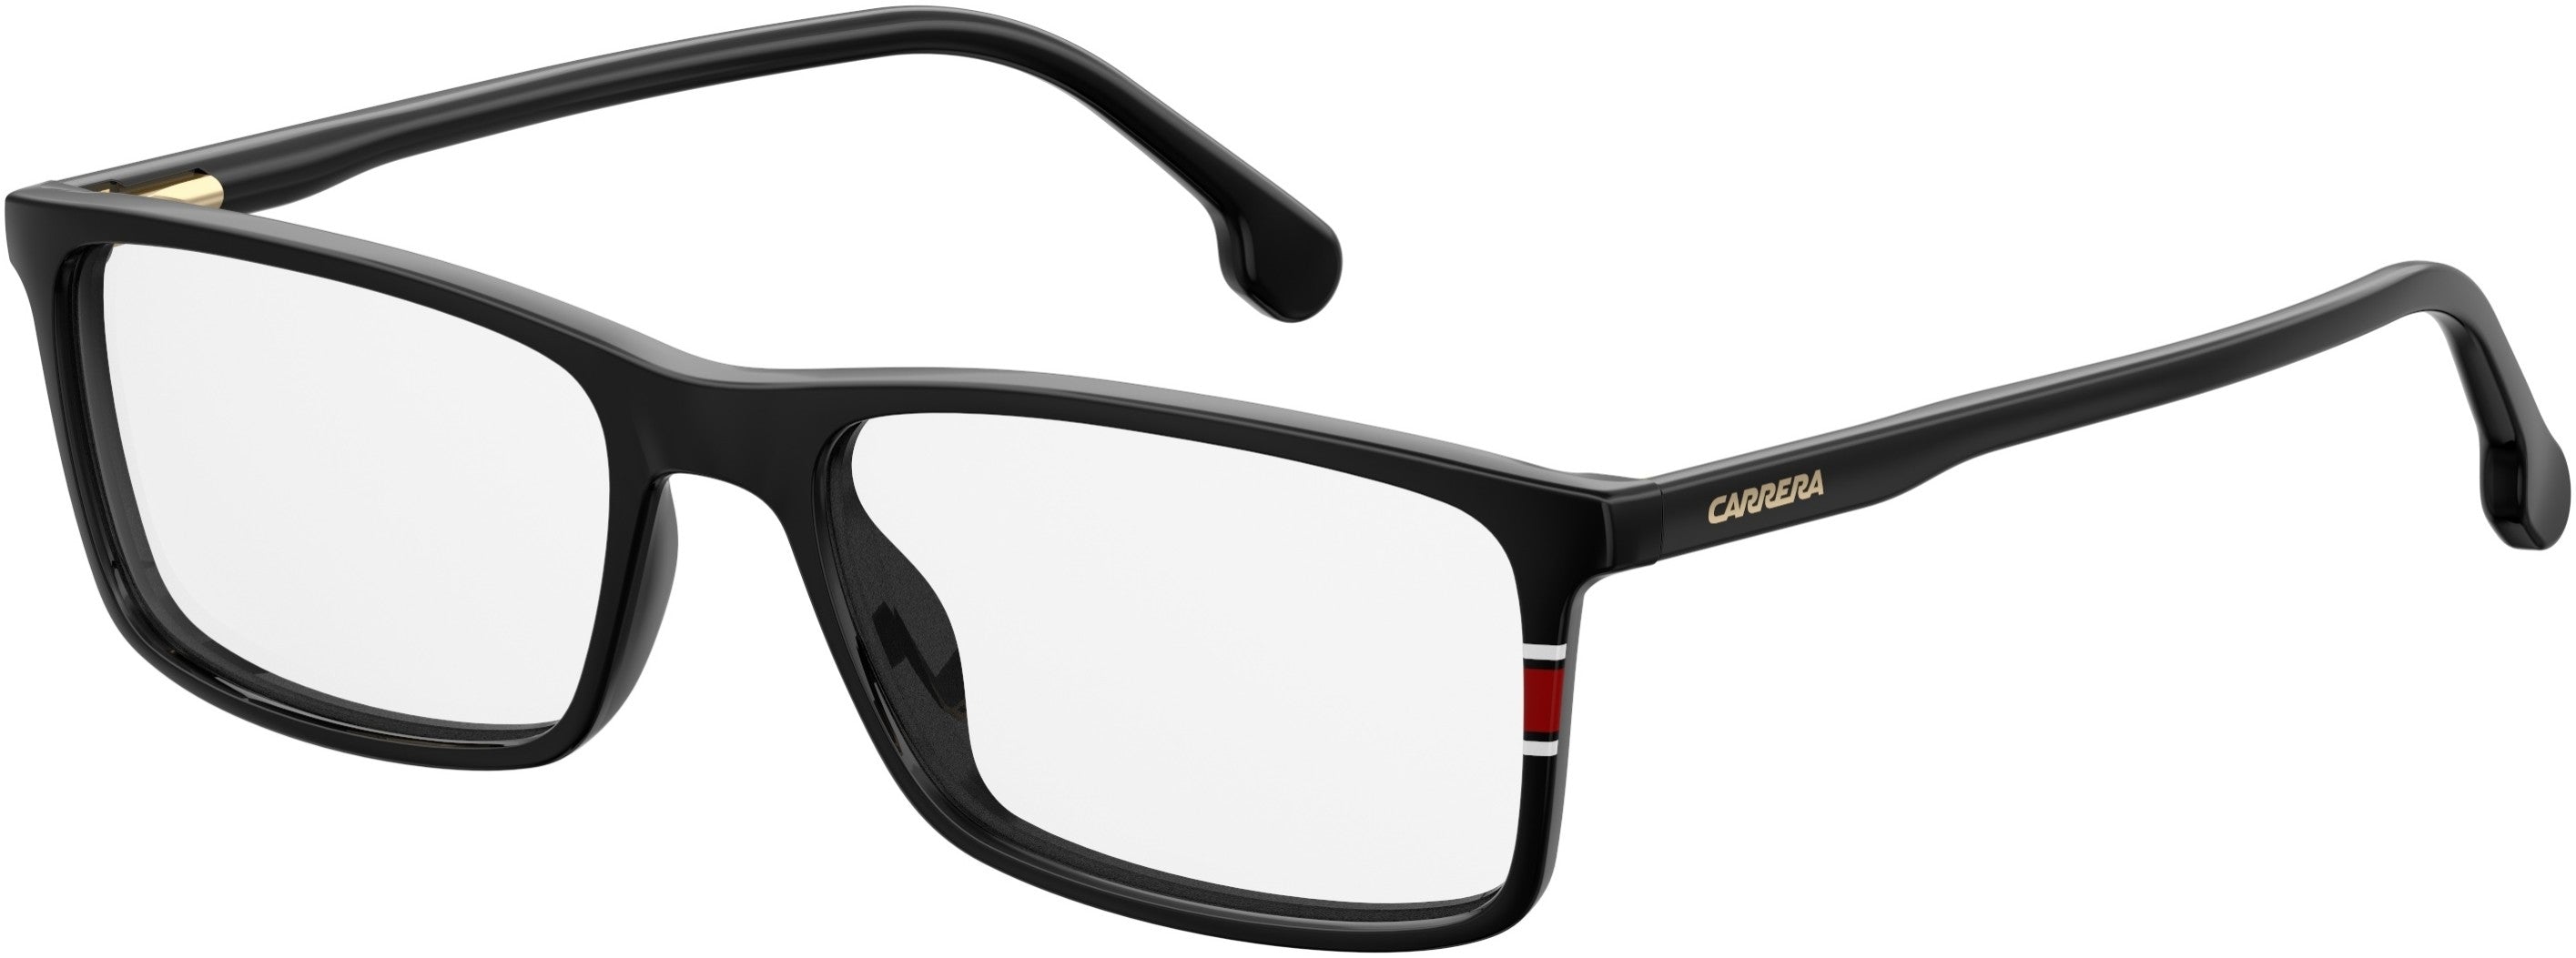  Carrera 175 Rectangular Eyeglasses 0807-0807  Black (00 Demo Lens)